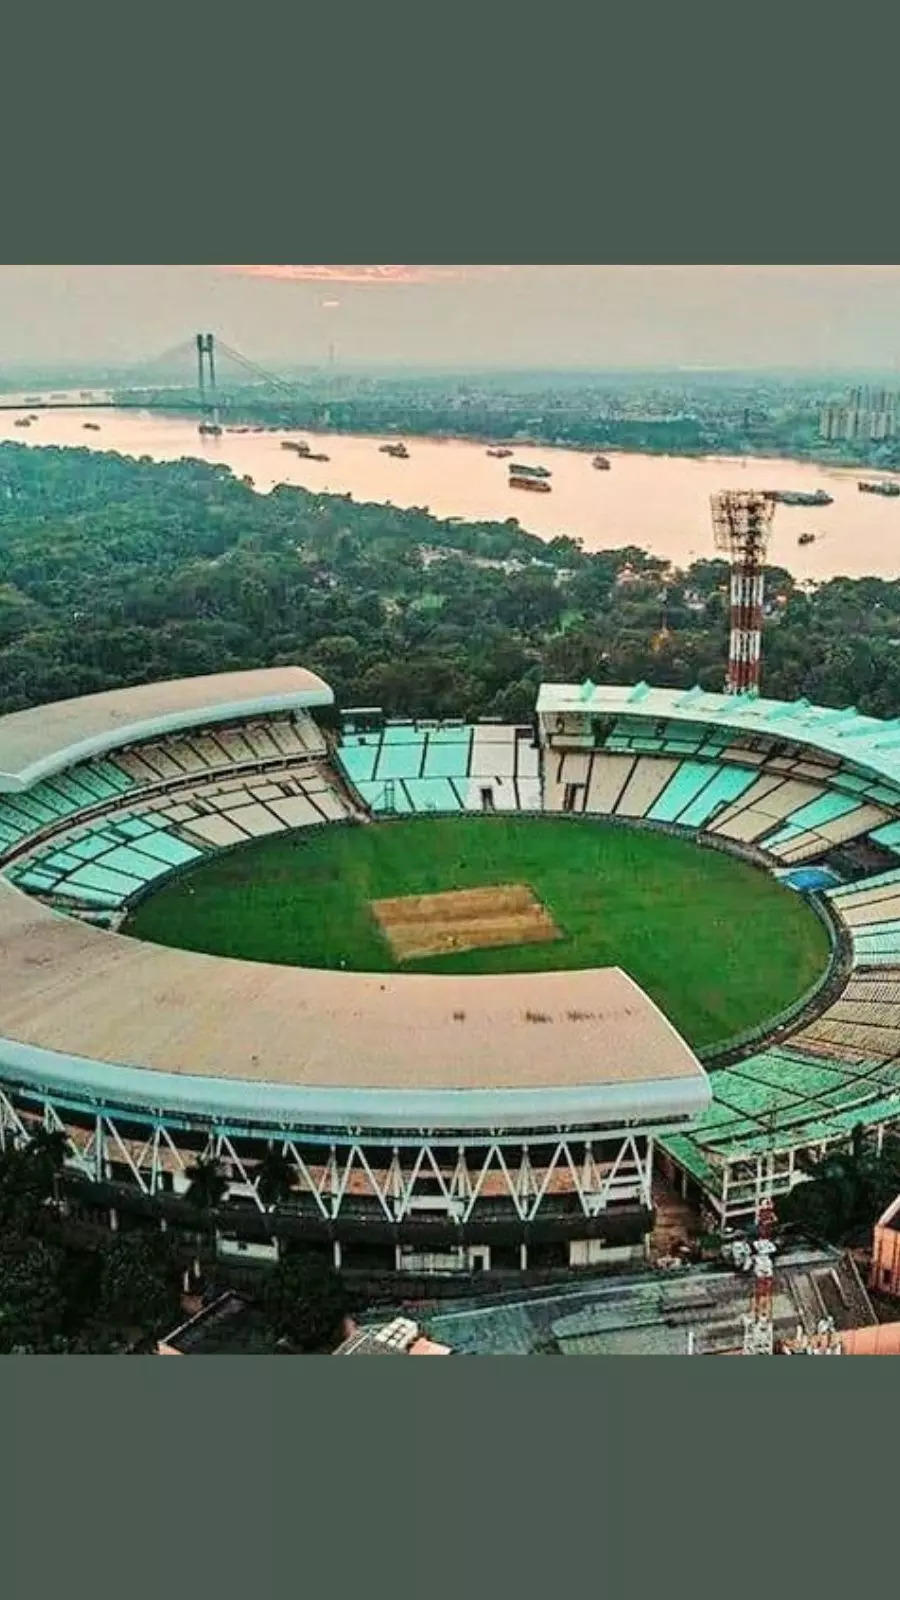 Astonishing cricket records made in Eden Gardens, Kolkata